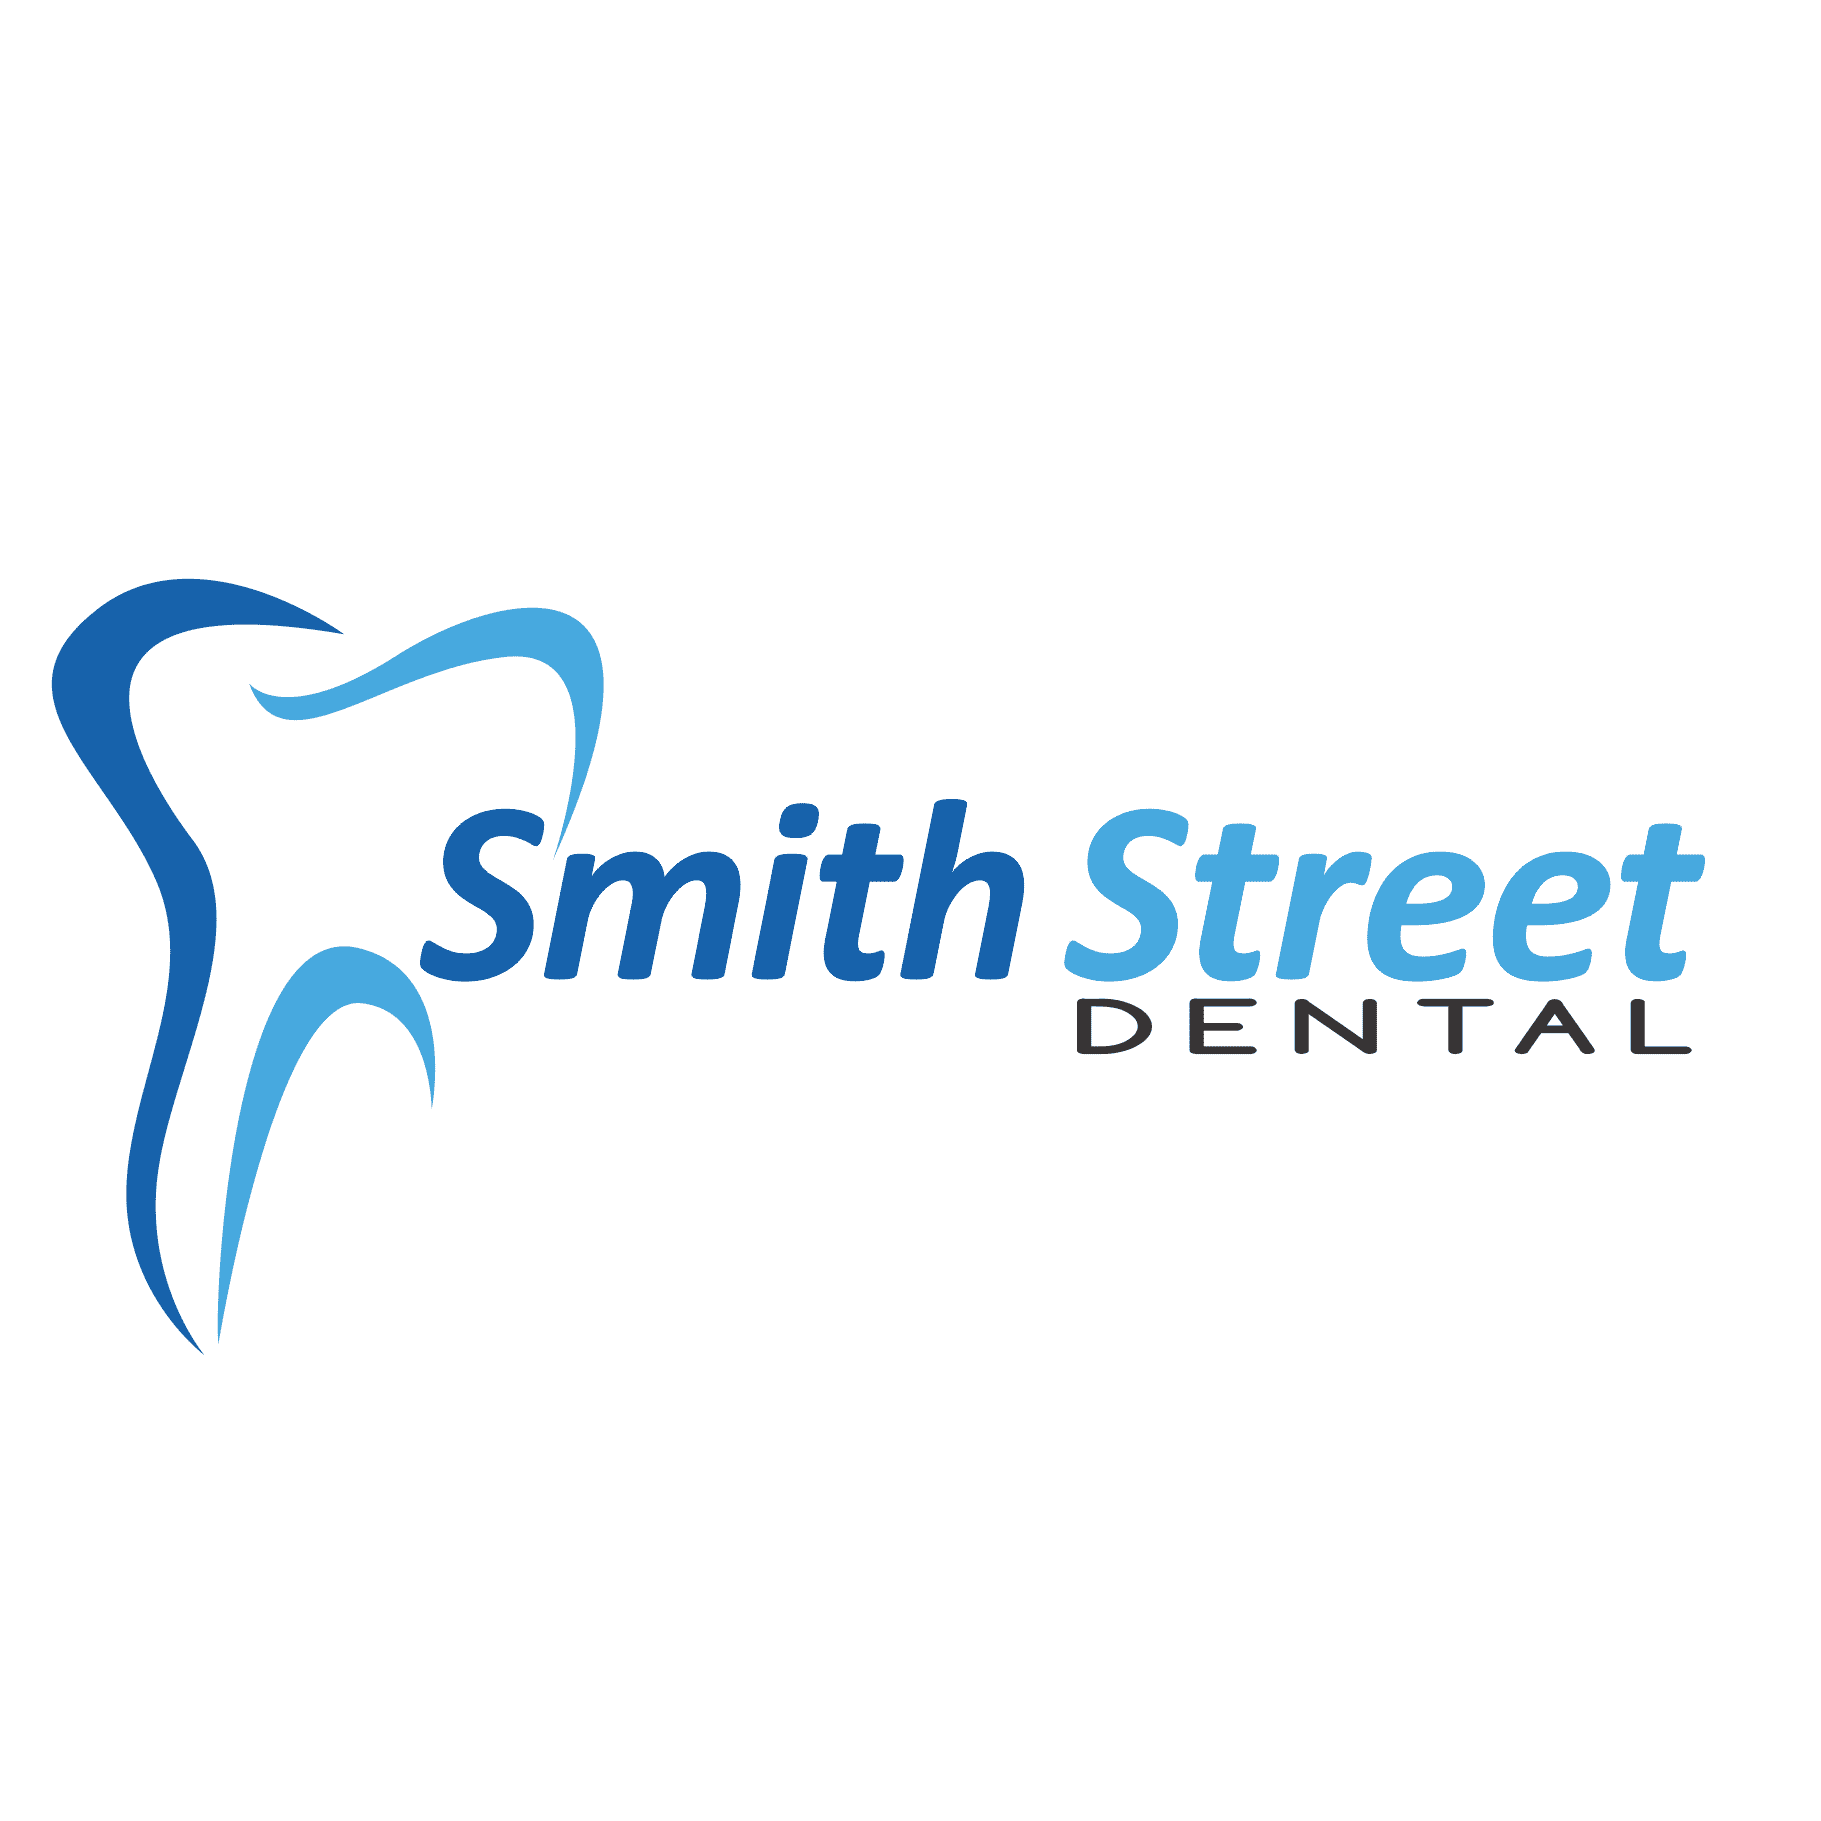 smith street dental seo